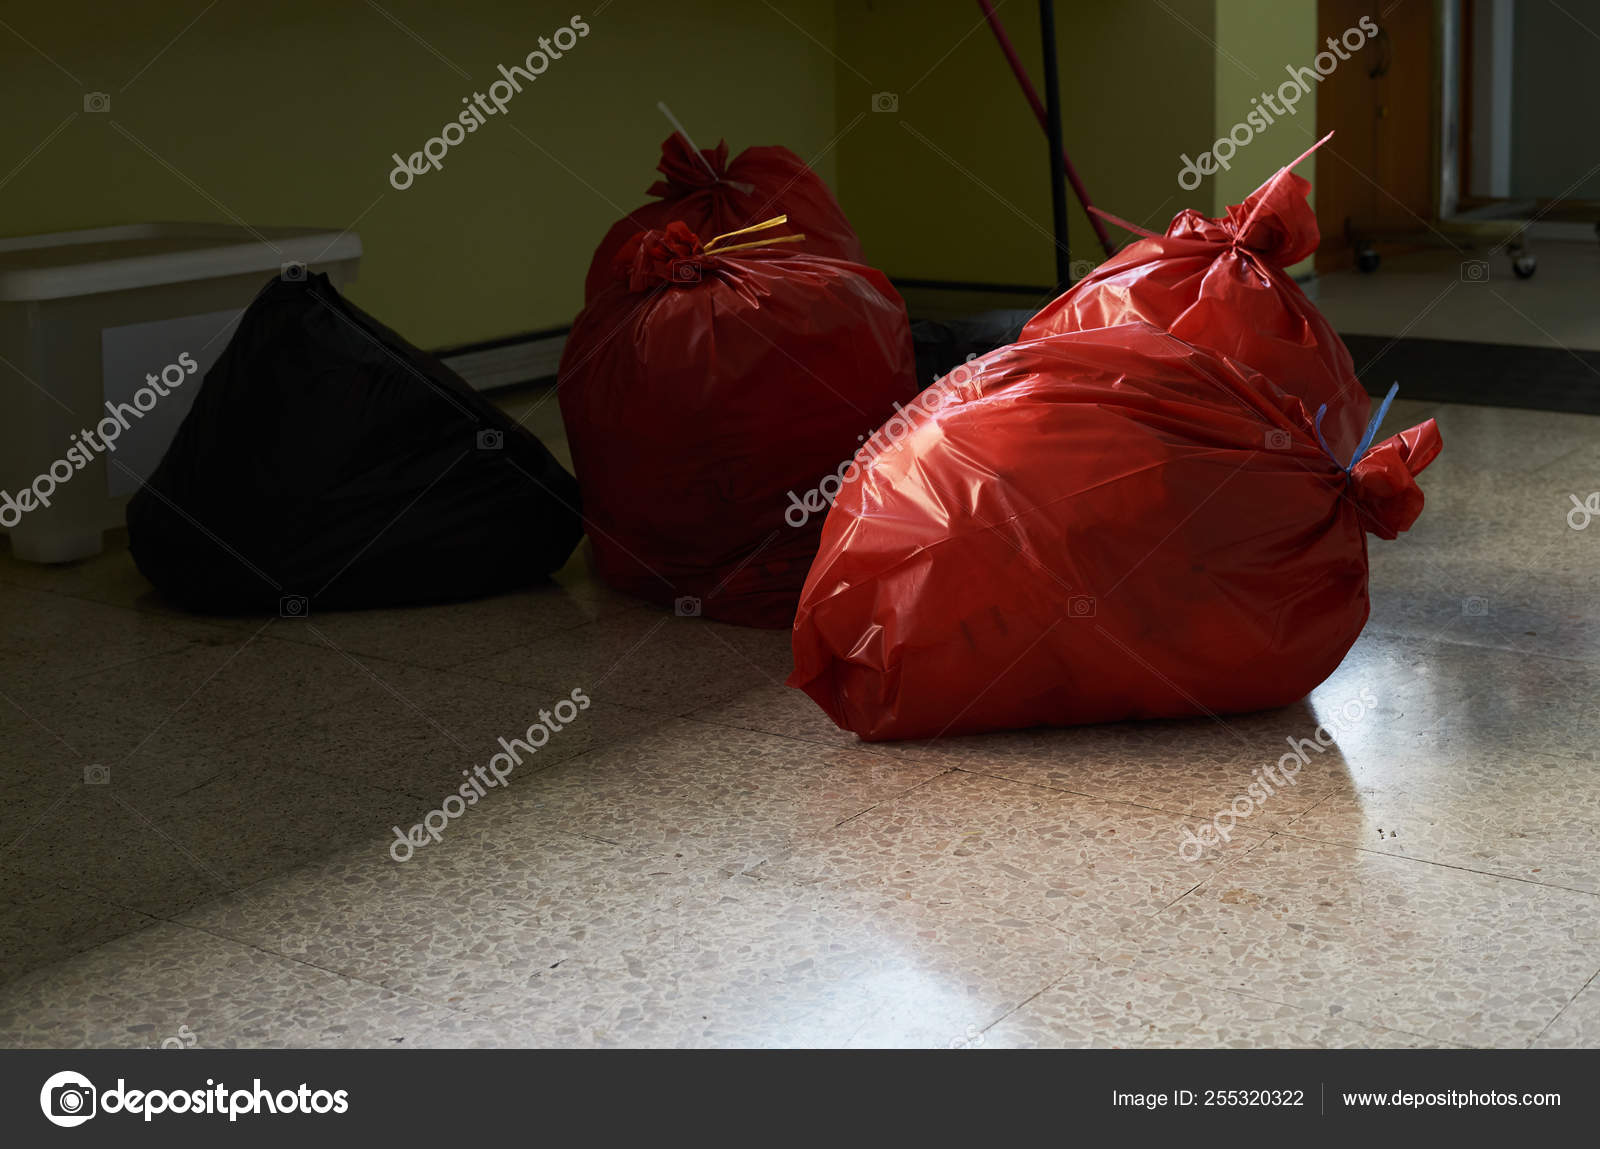 https://st4.depositphotos.com/12173334/25532/i/1600/depositphotos_255320322-stock-photo-red-and-black-garbage-bags.jpg